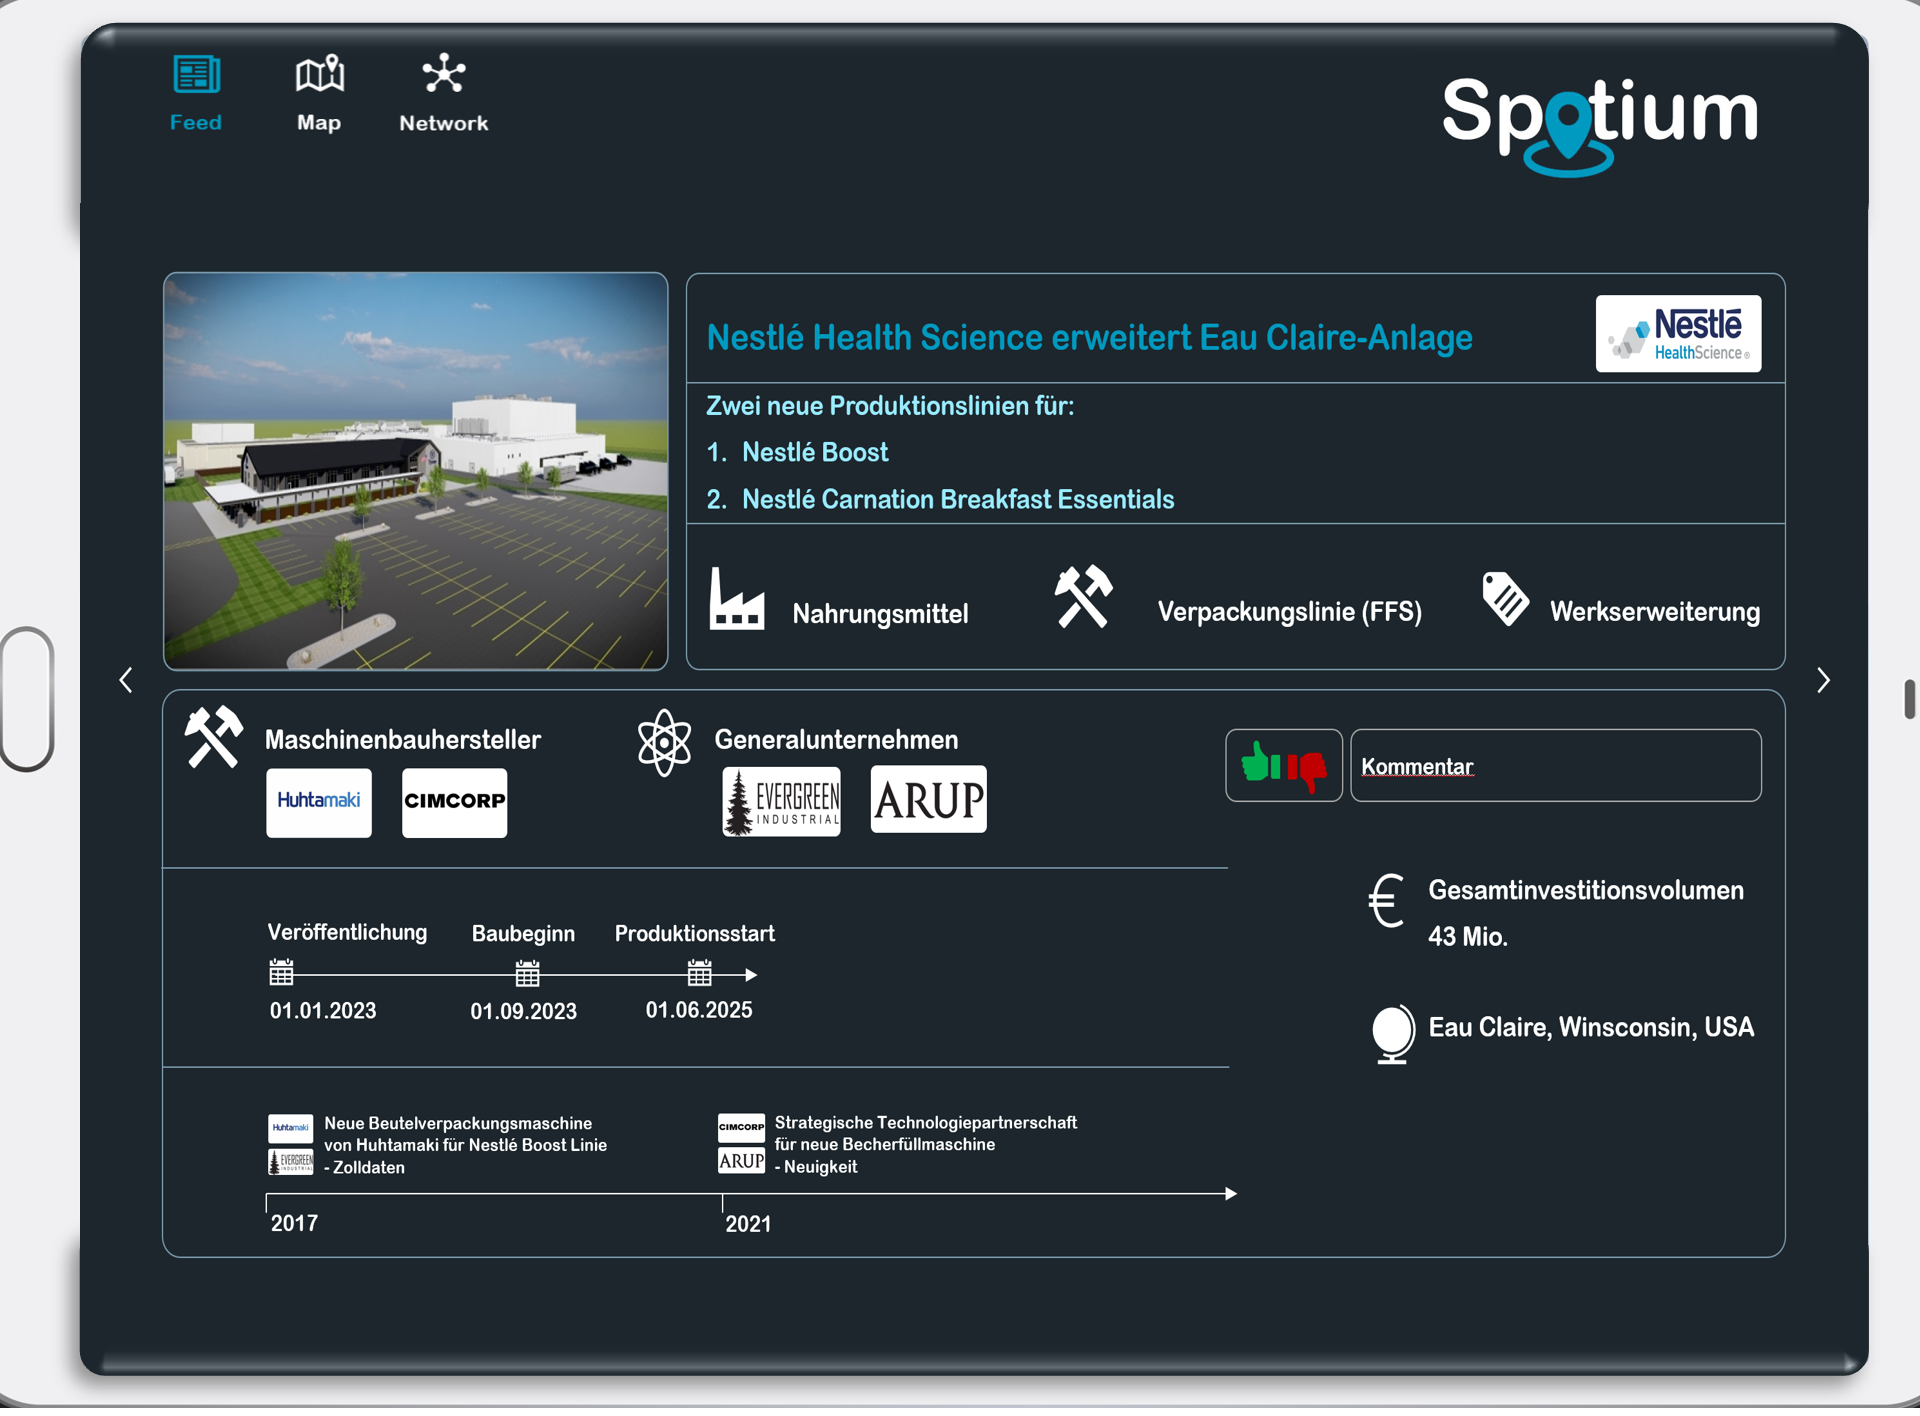 Spotium Marktinformationssoftware mit KI